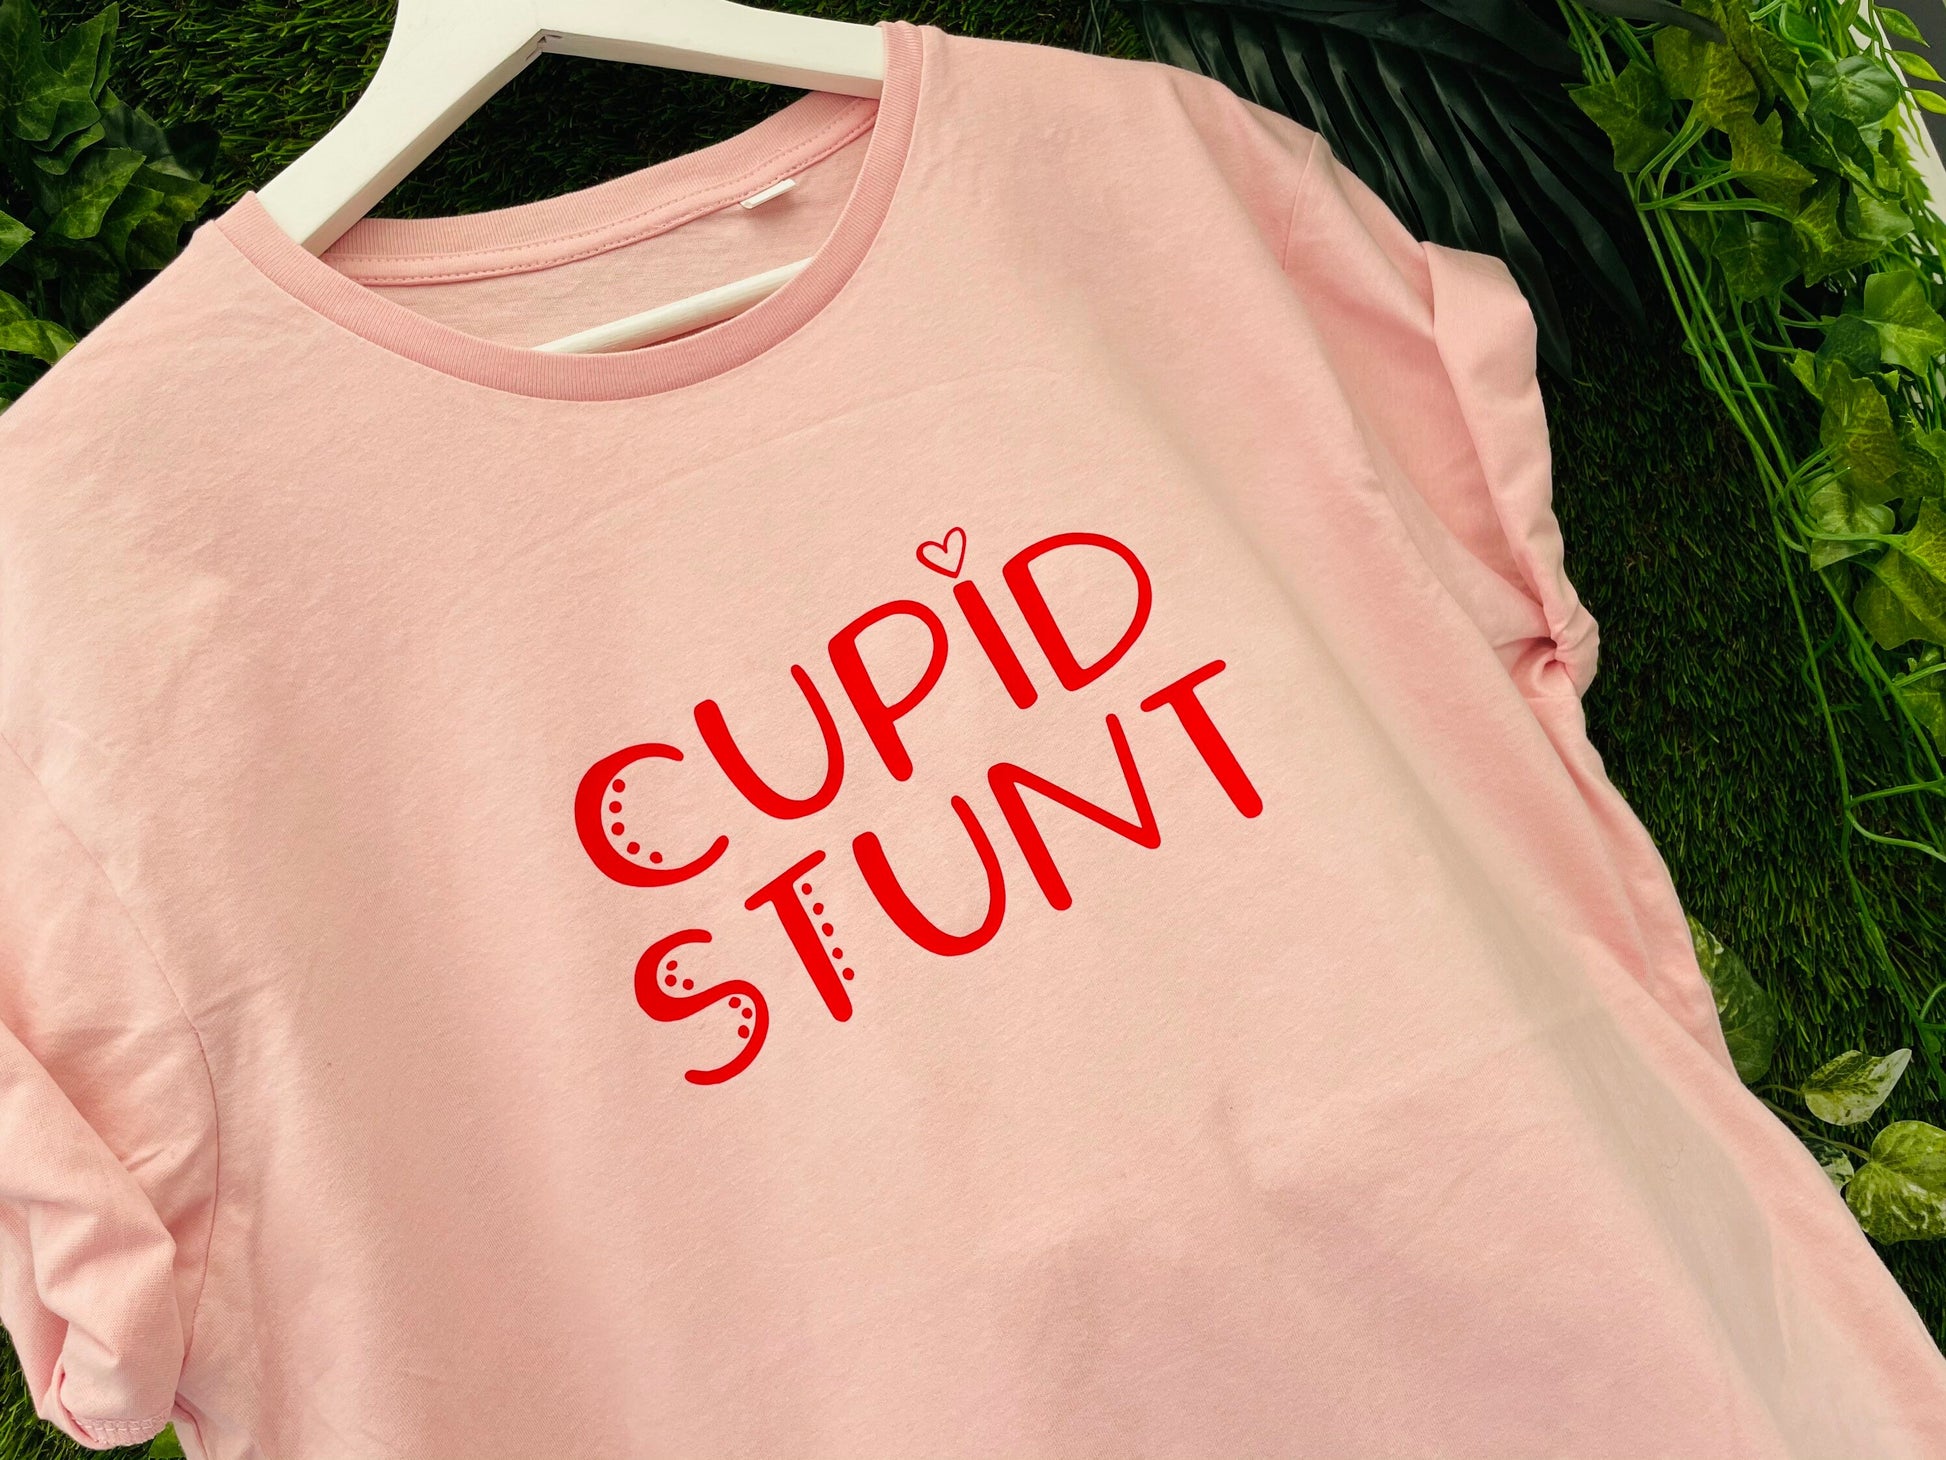 Cupid Stunt | Subtle Sweary Slogan T-shirt | Organic Tee